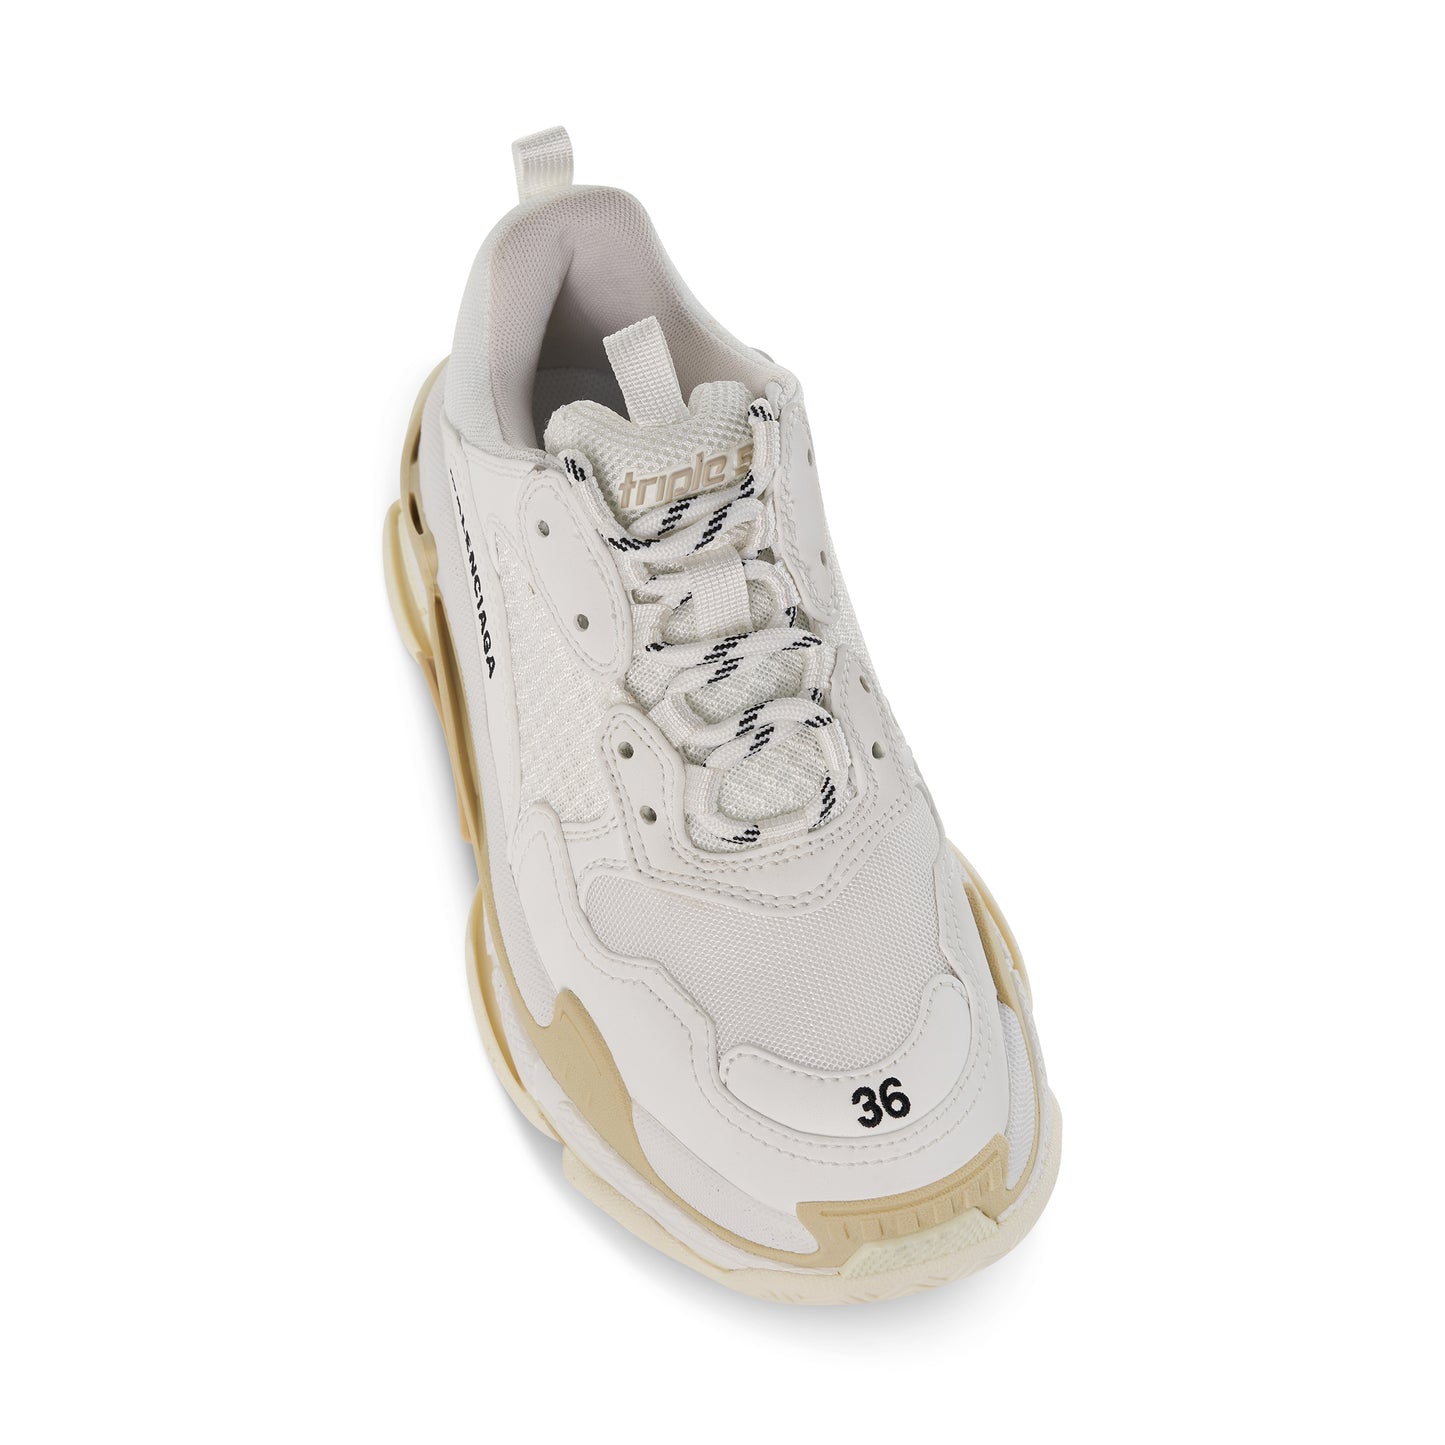 Triple S Sneakers in White